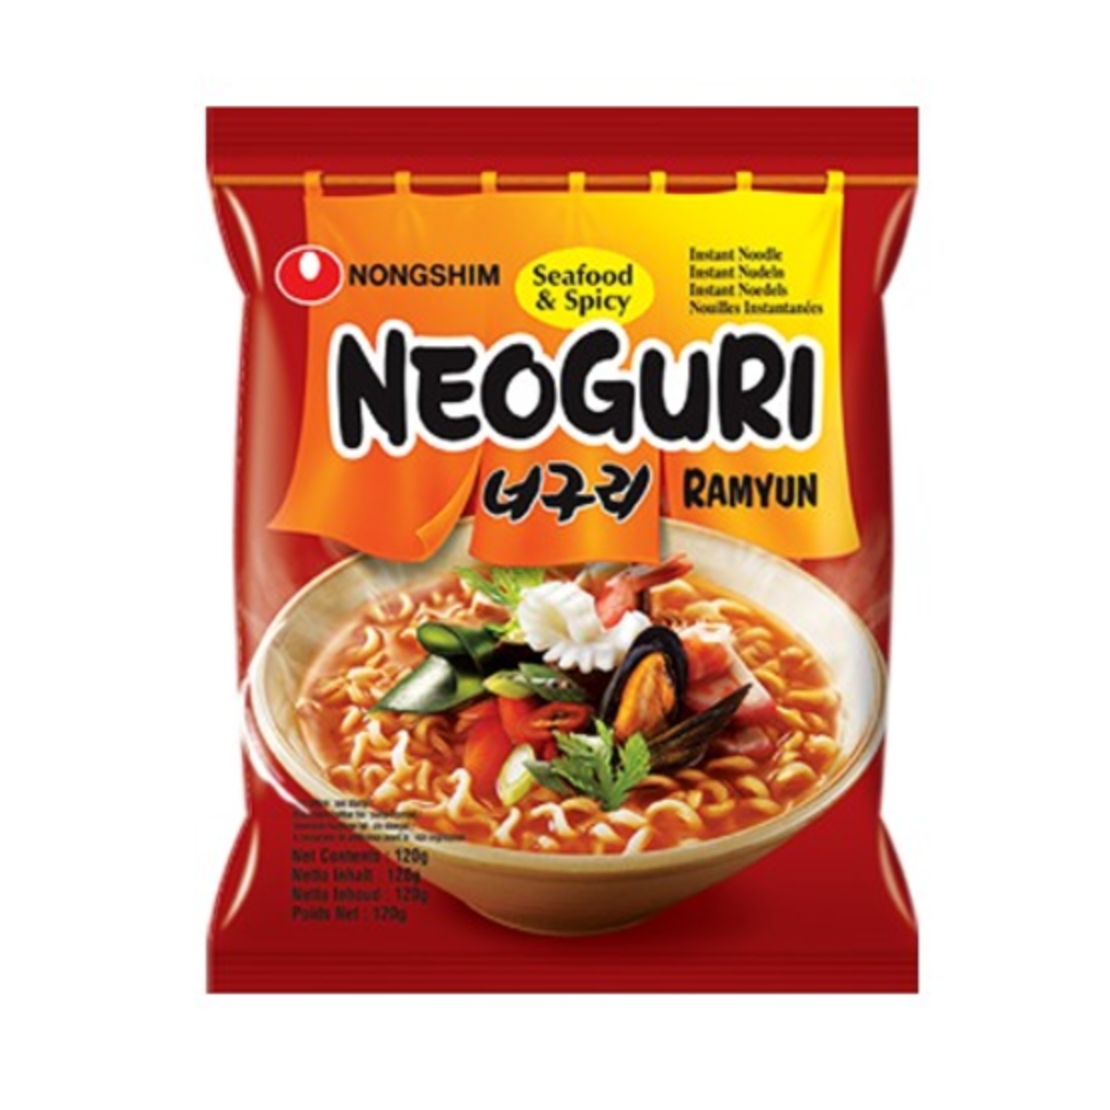 Nongshim Neoguri Seafood @ Spicy